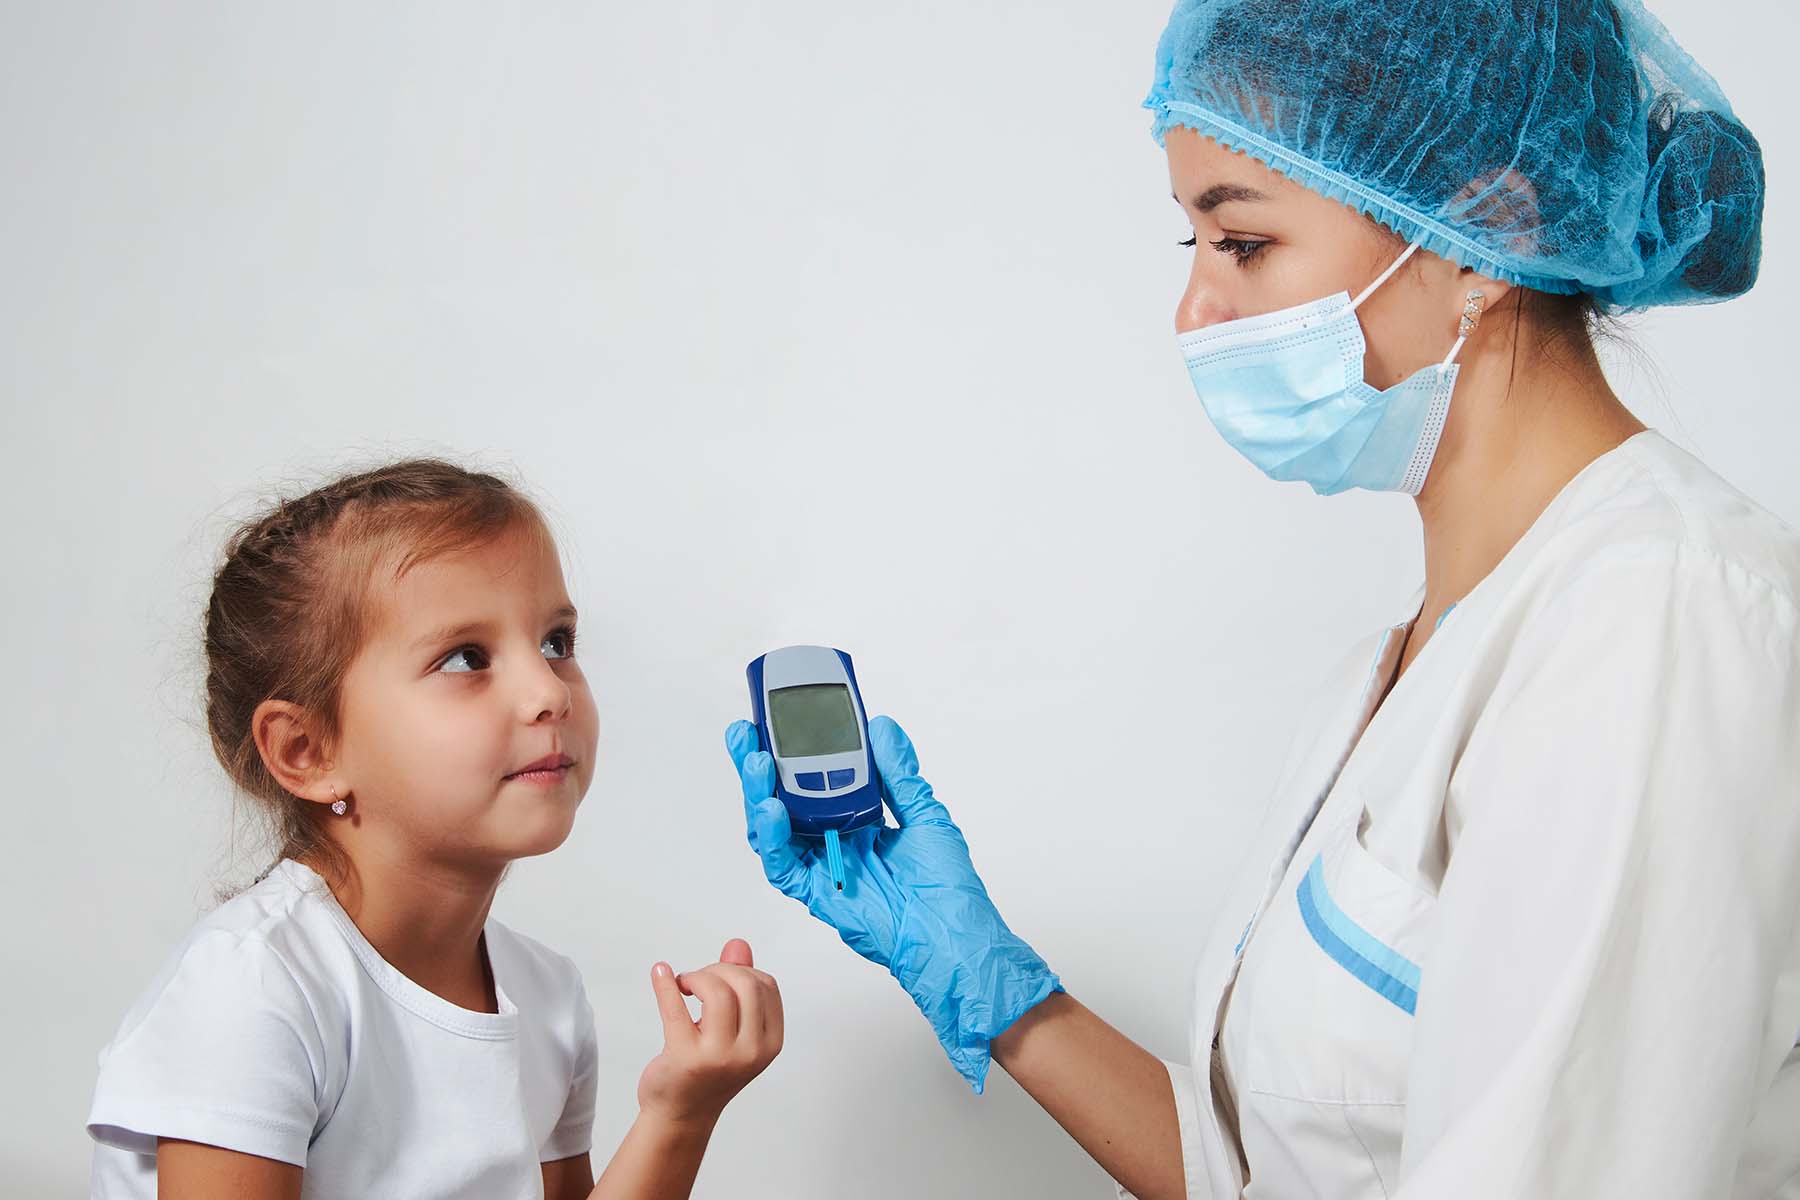 Nurse checks blood sugar of a little girl with diabetes.